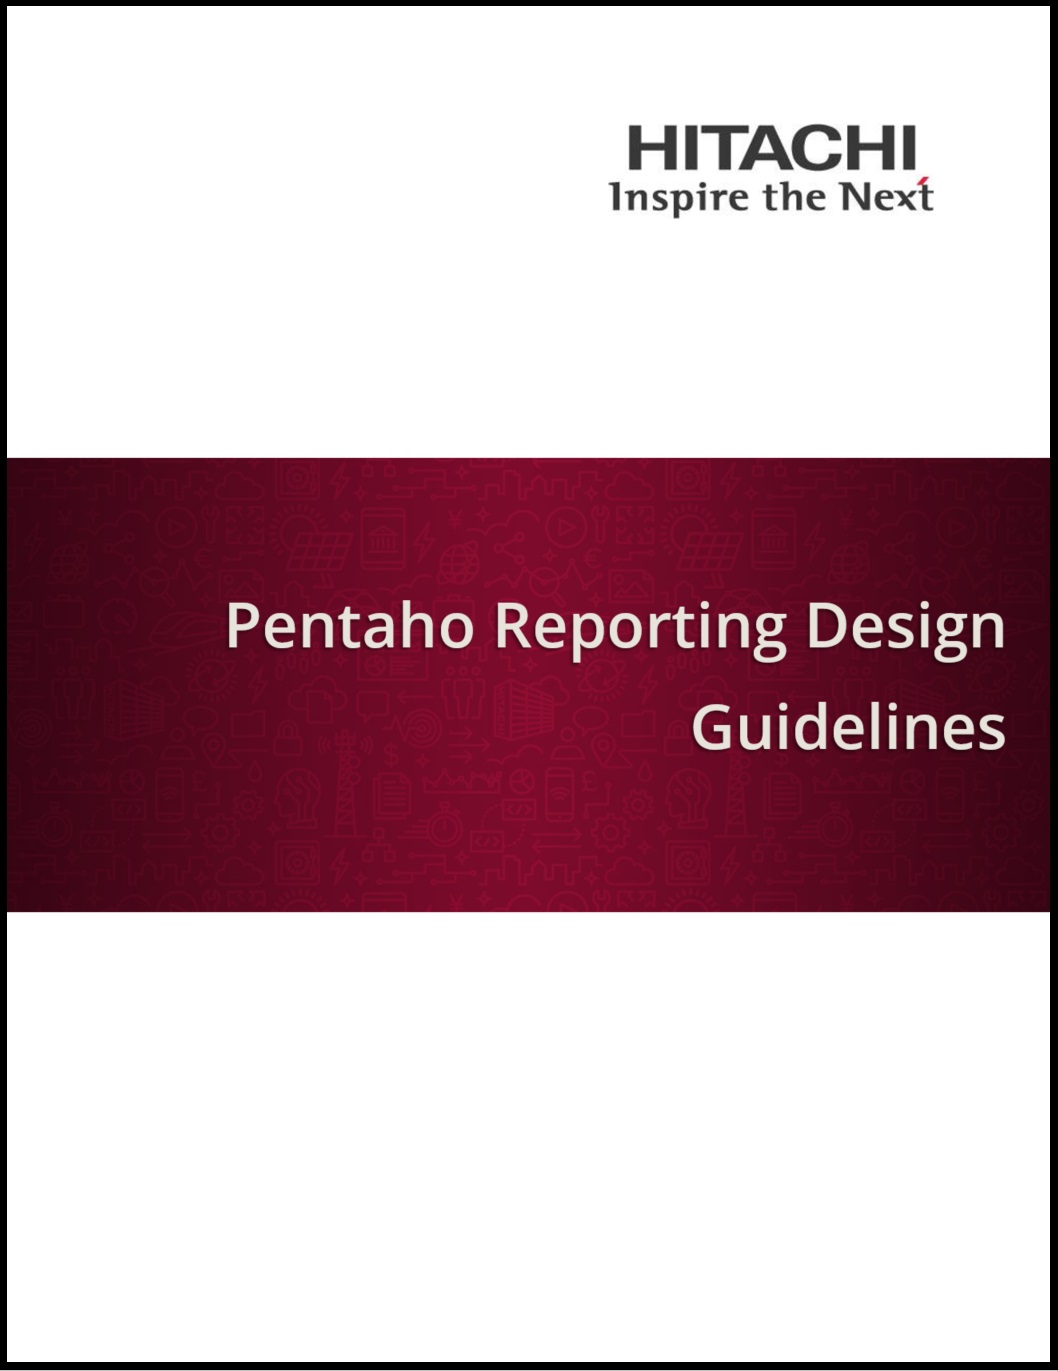 Pentaho_Reporting_Design_Guidelines.jpg